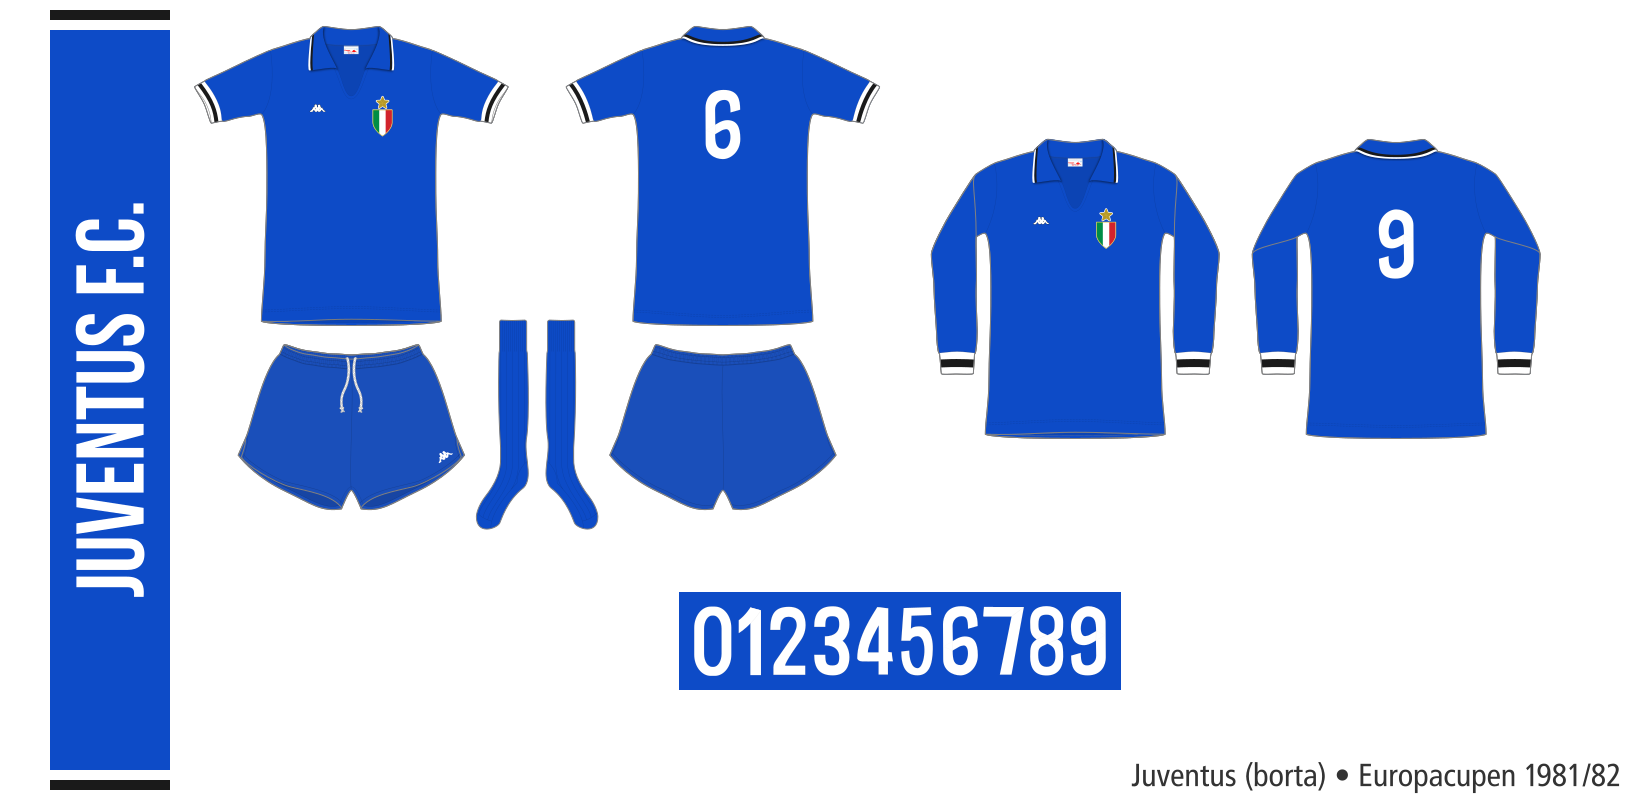 Juventus 1981/82 (borta Europacupen)